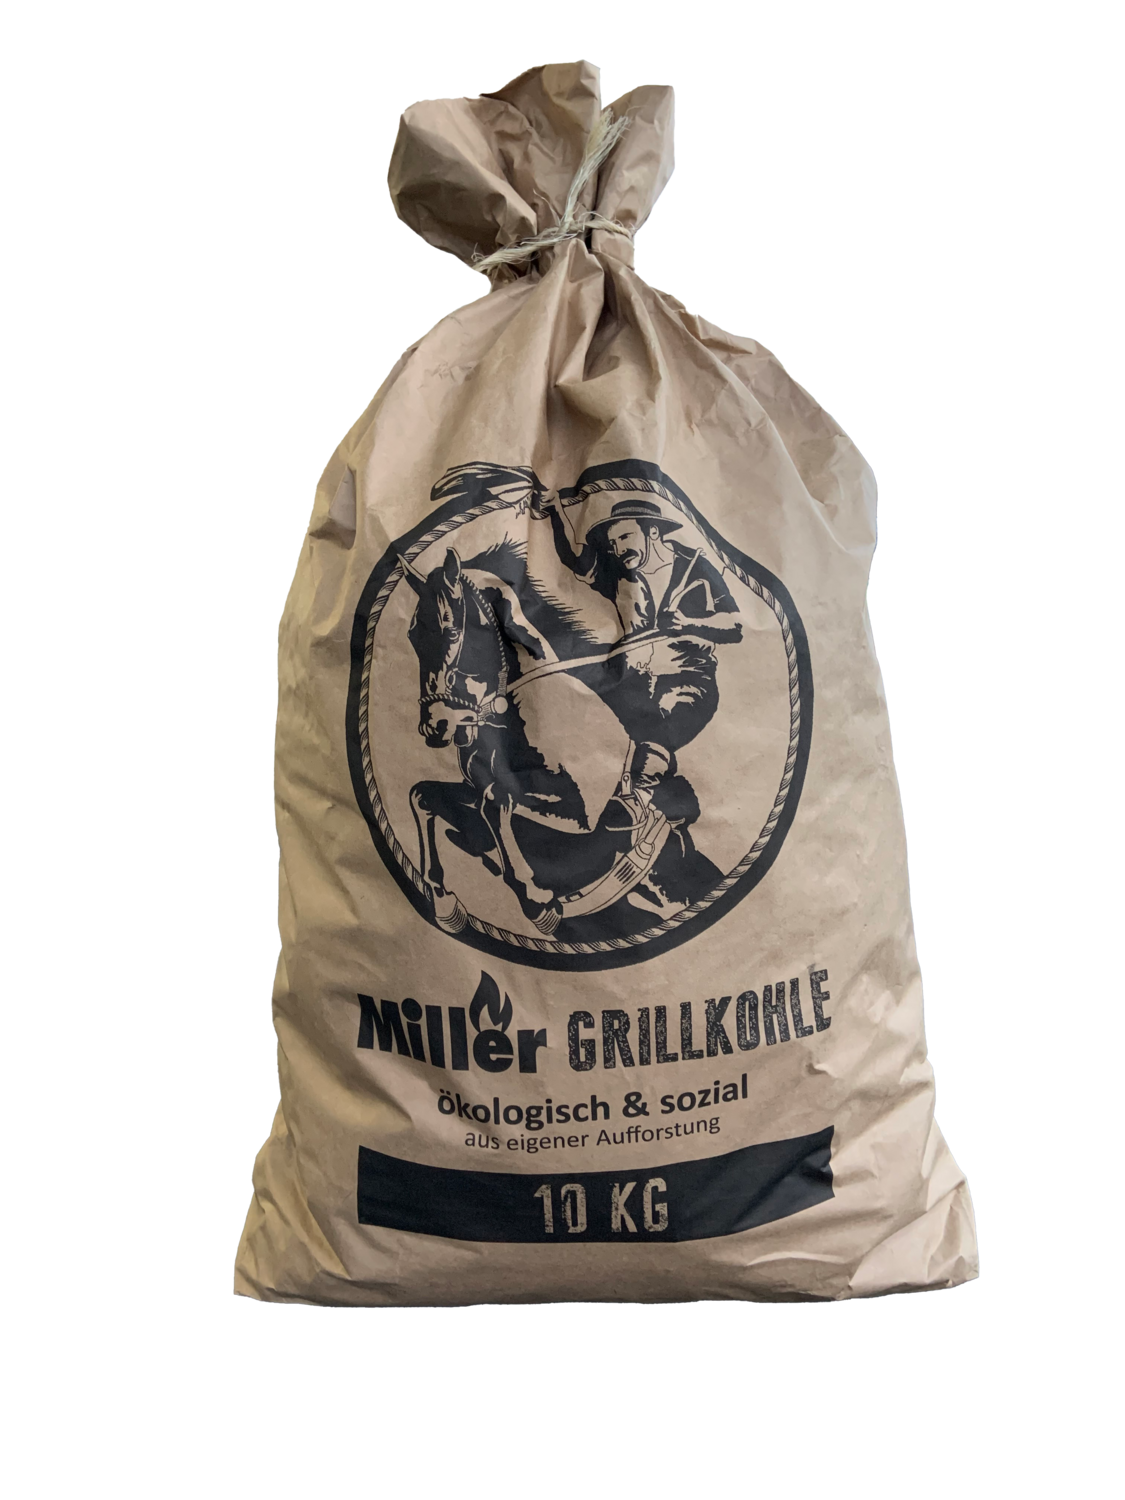 Miller Grillkohle 10 kg im Papiersack | Holzkohle | 100% nachhaltig